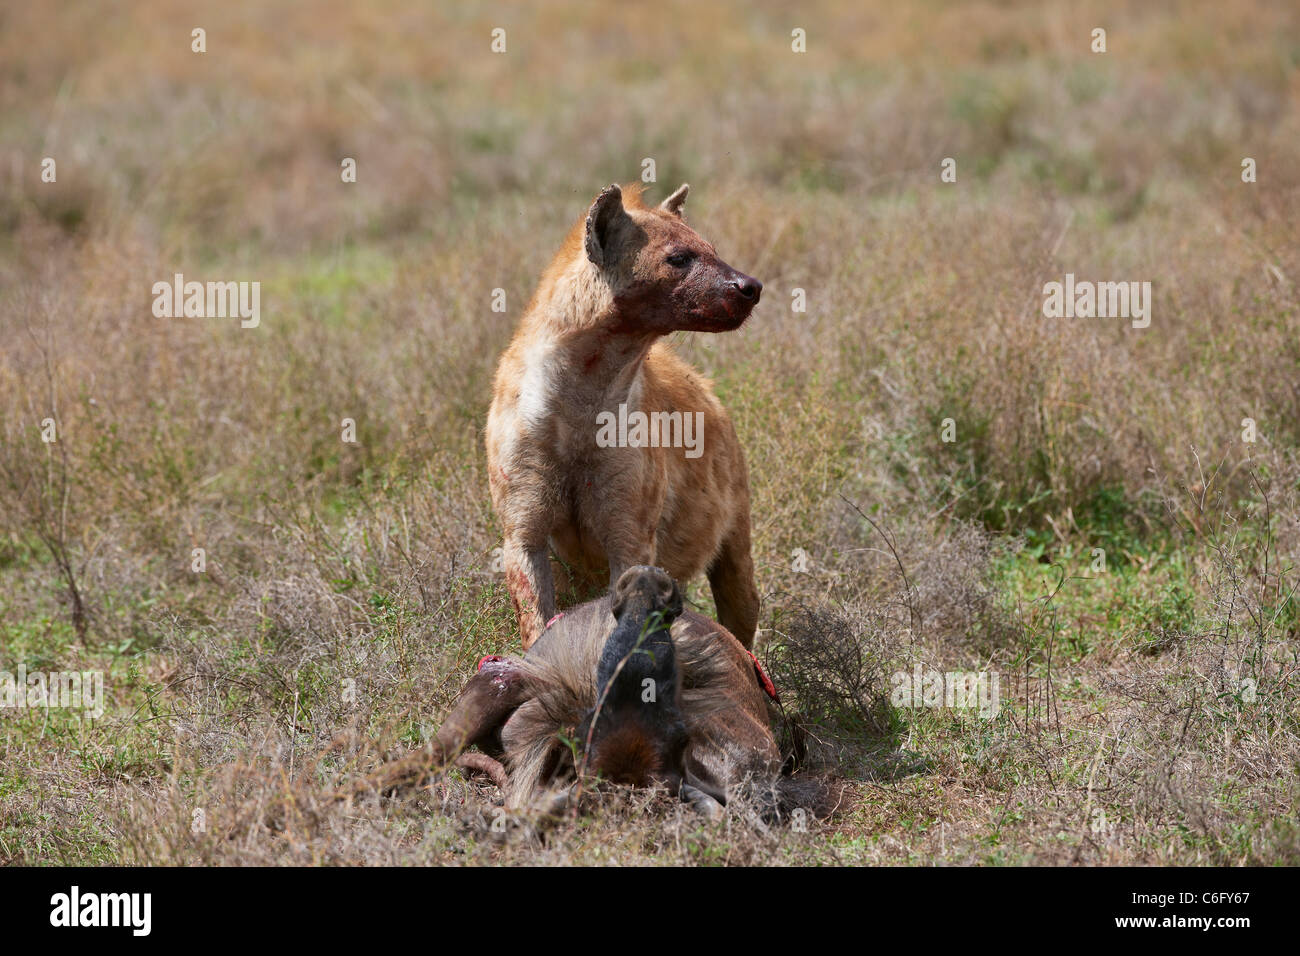 Spotted Hyena on carcass, Crocuta crocuta, Serengeti, Tanzania, Africa Stock Photo